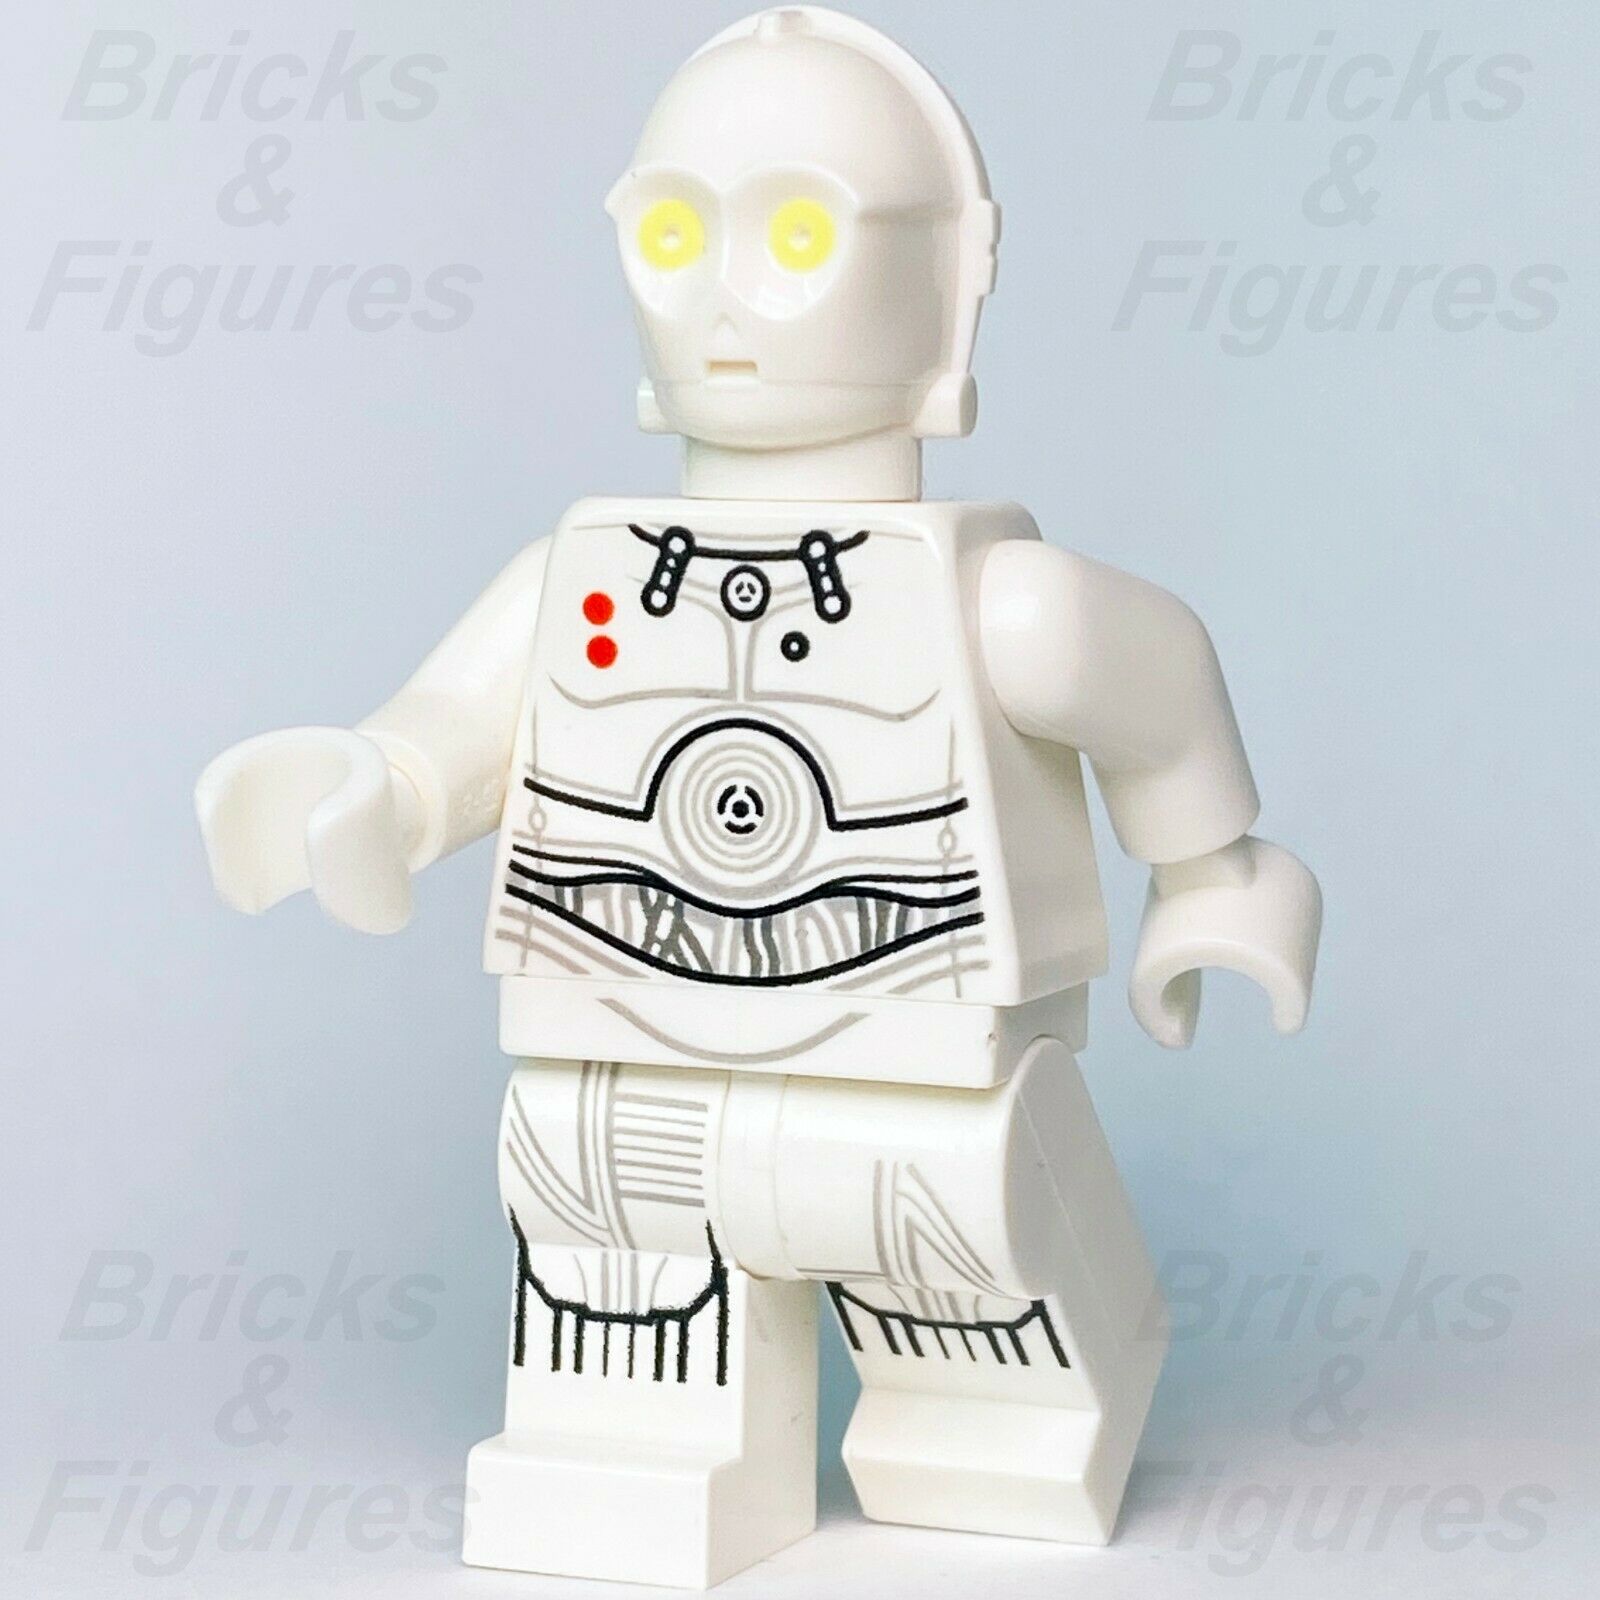 New Star Wars LEGO K-3PO White Hoth Rebel Protocol Droid Minifigure 75098 - Bricks & Figures